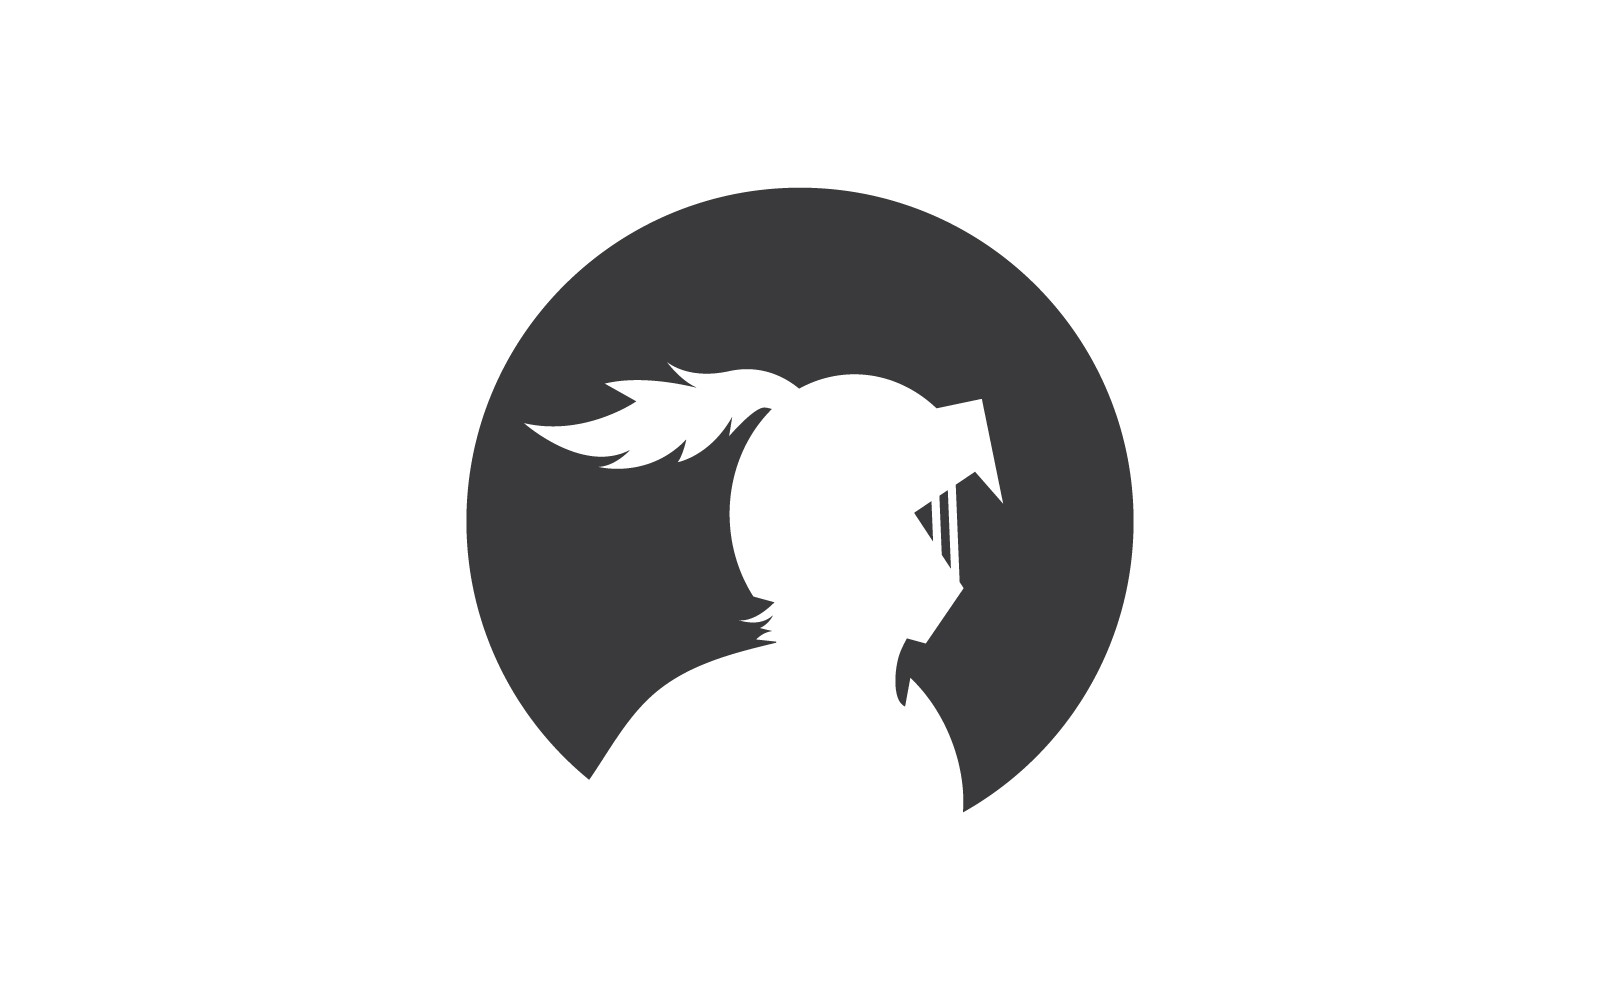 Horse knight hero logo illustration vector template